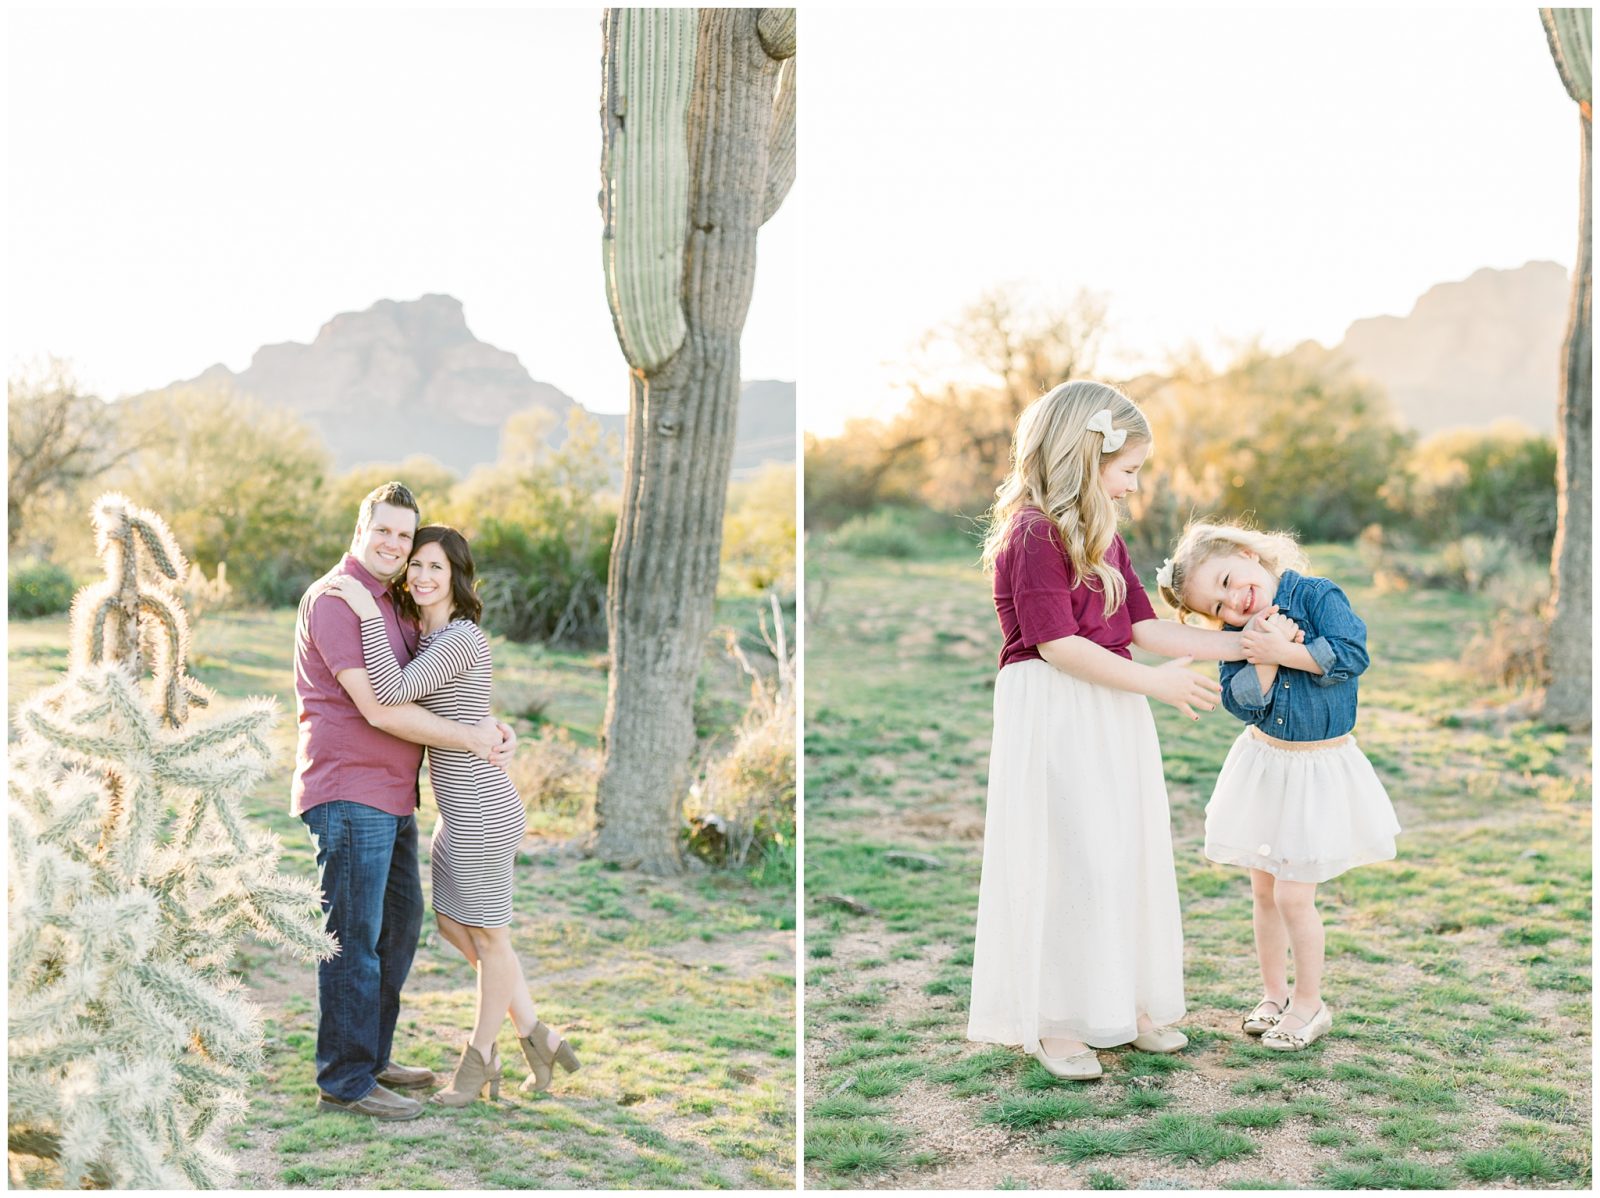 Family Photo Session in the Lush Green Mesa, Arizona Desert by Aly Kirk Photo